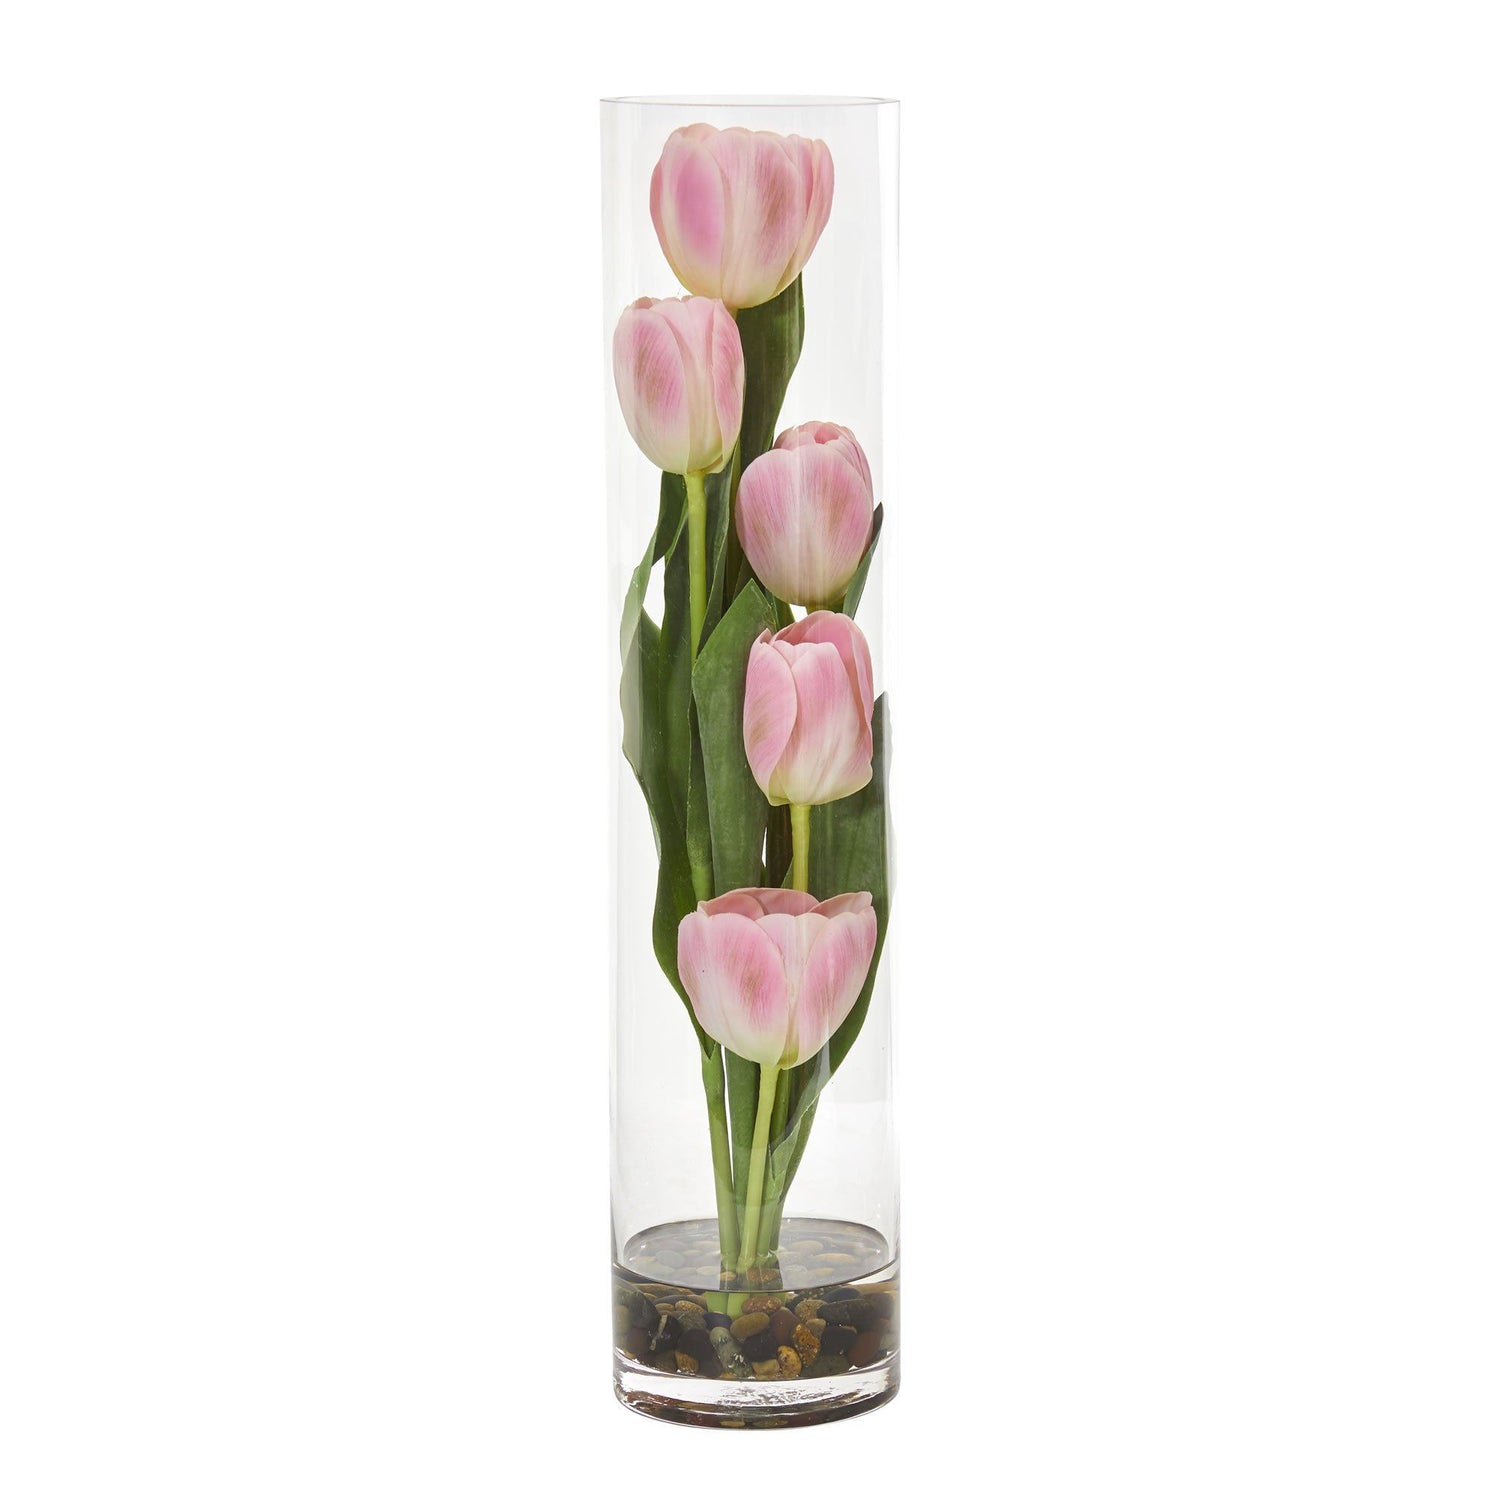 18" Tulips Artificial Arrangement in Clear Cylinder Vase"